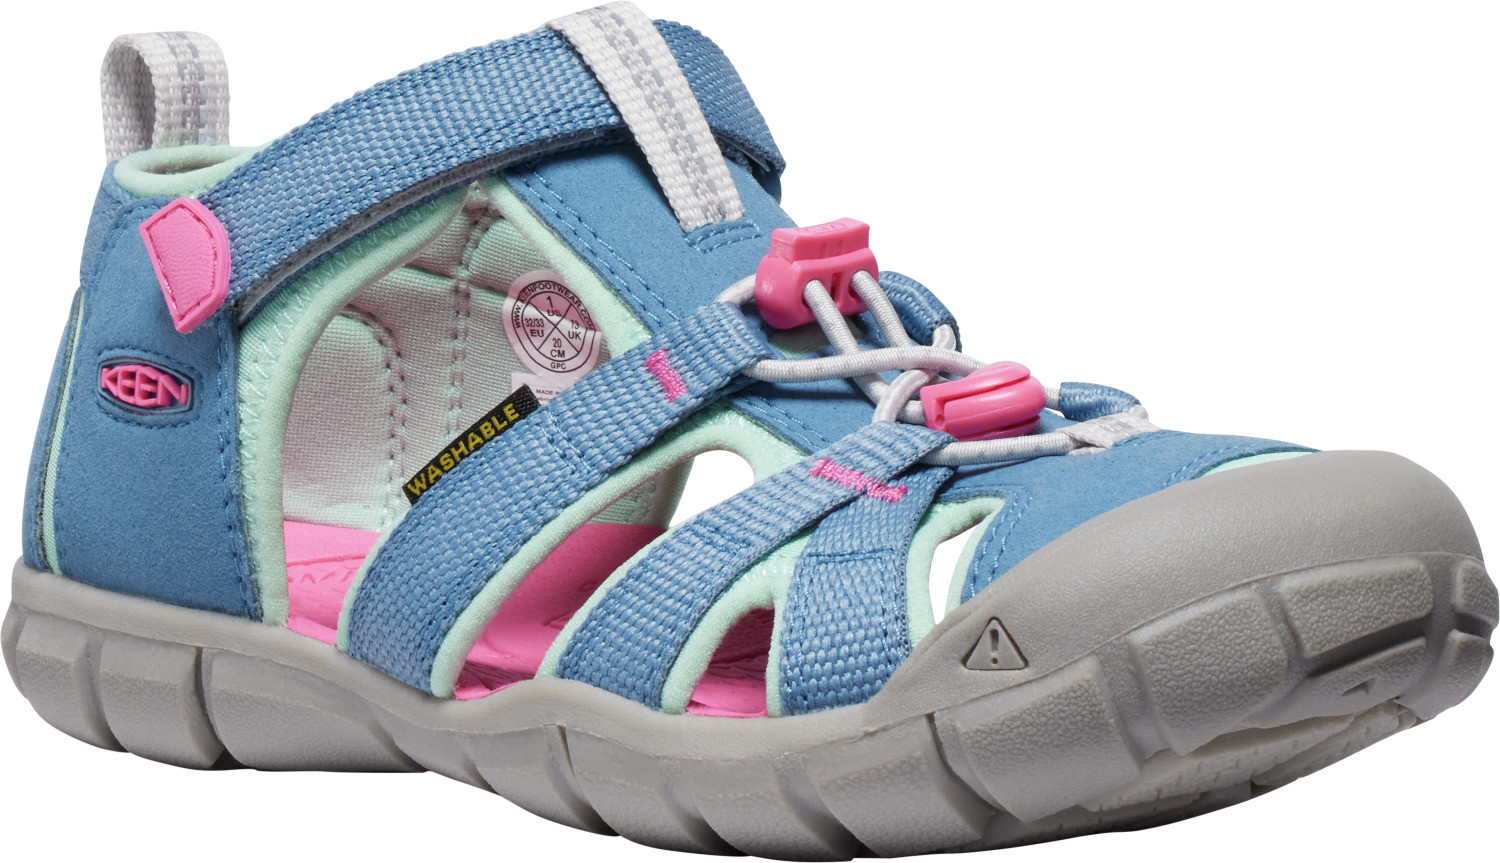 Keen SEACAMP II CNX YOUTH coronet blue/hot pink Veľkosť: 39 detské sandále